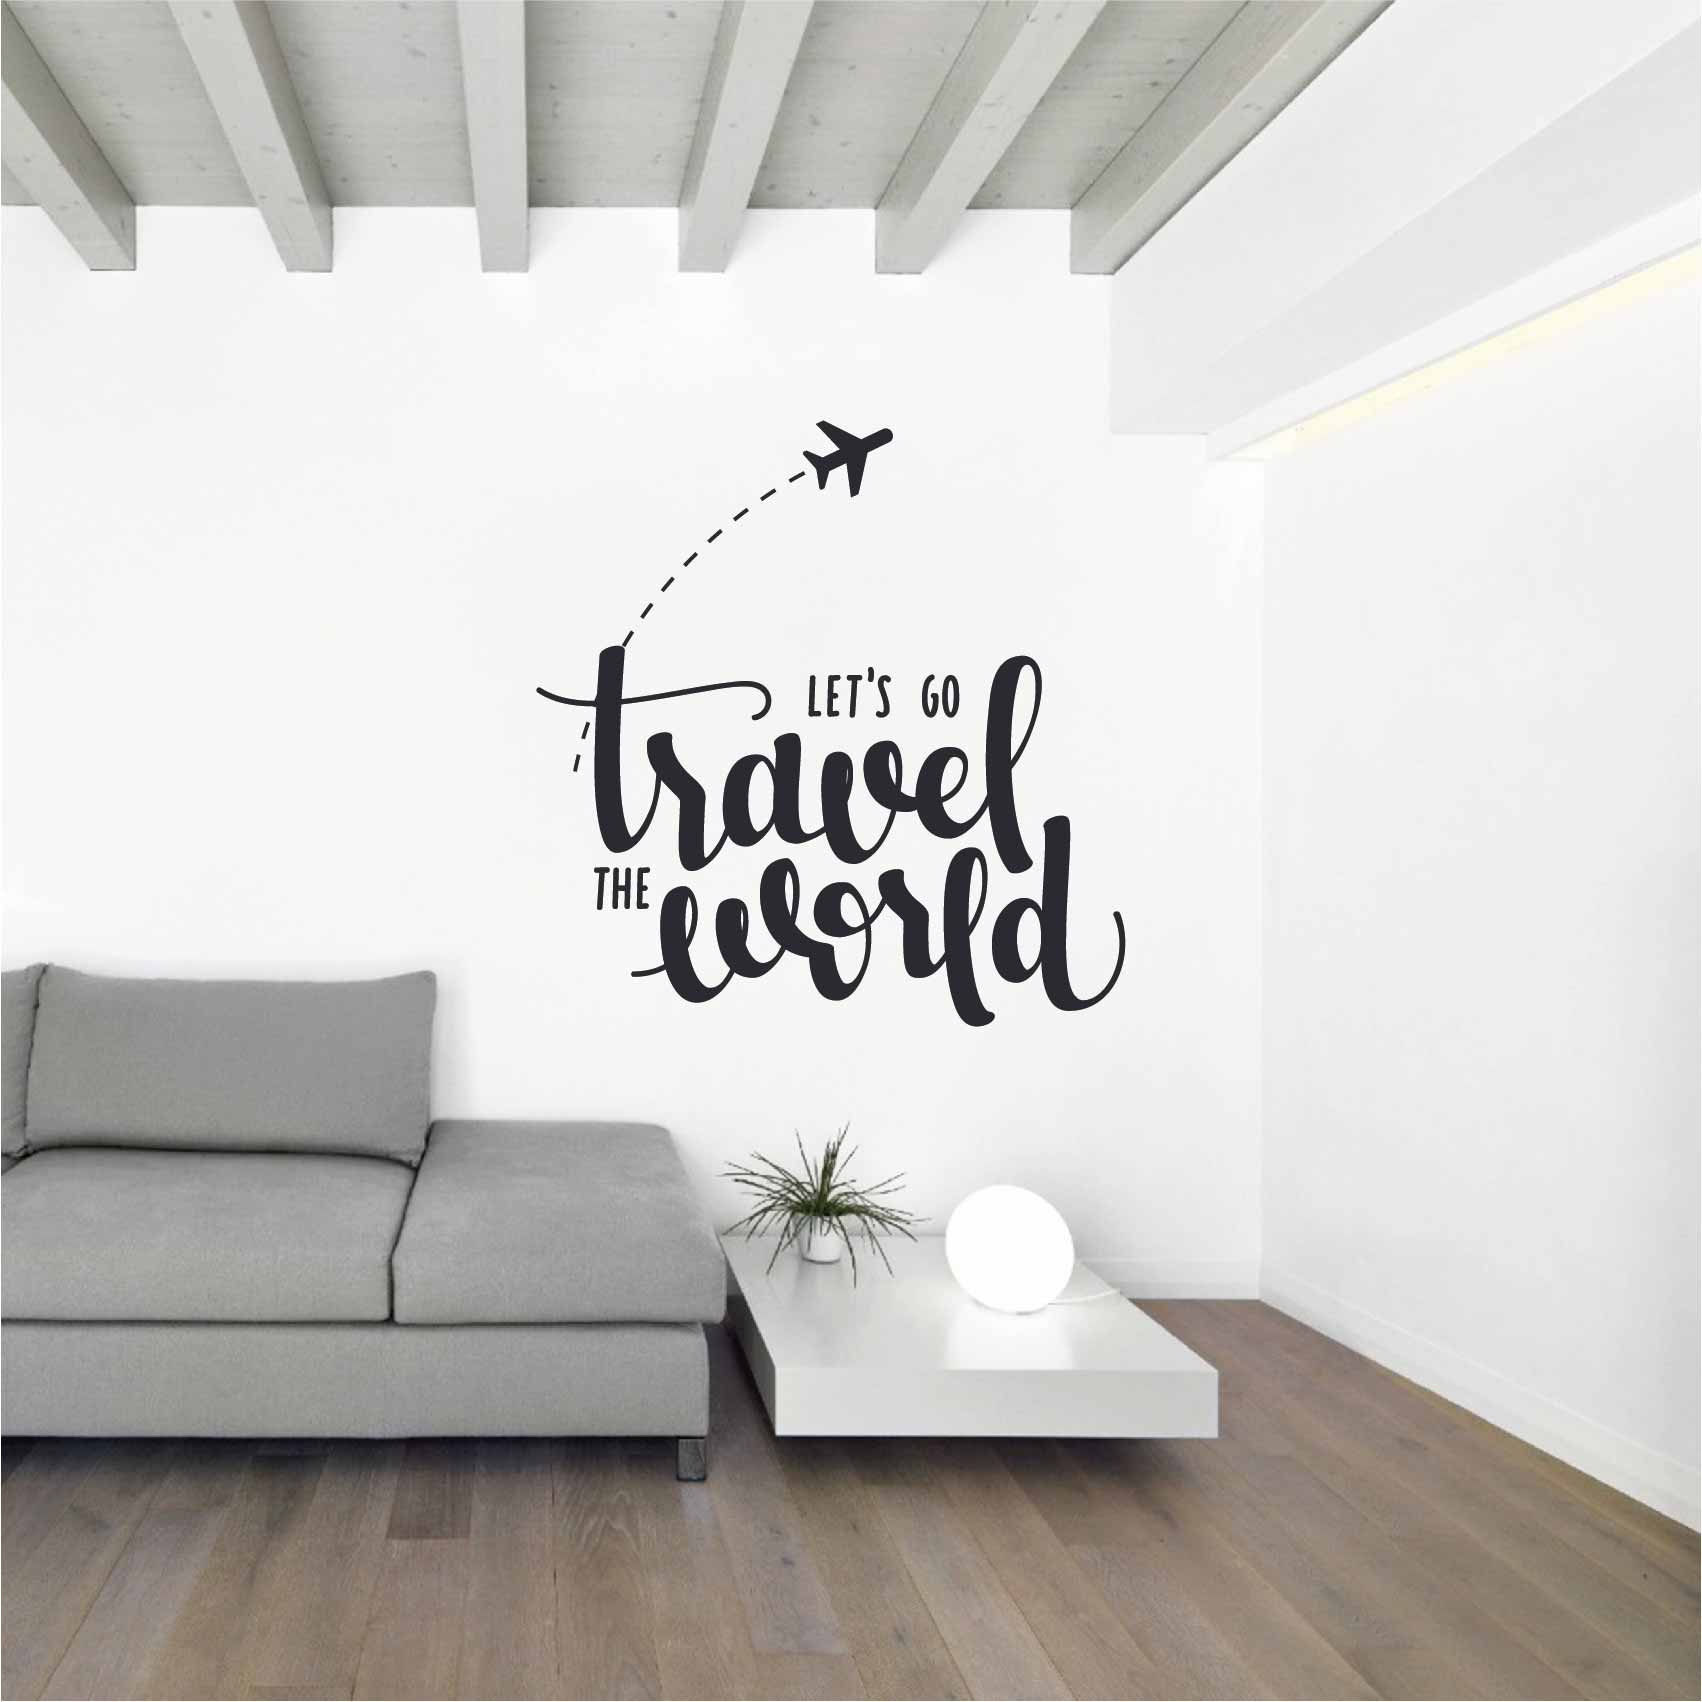 stickers-lets-go-travel-the-world-avion-voyage-ref1letsgo-autocollant-mural-stickers-muraux-sticker-deco-salon-cuisine-chambre-min